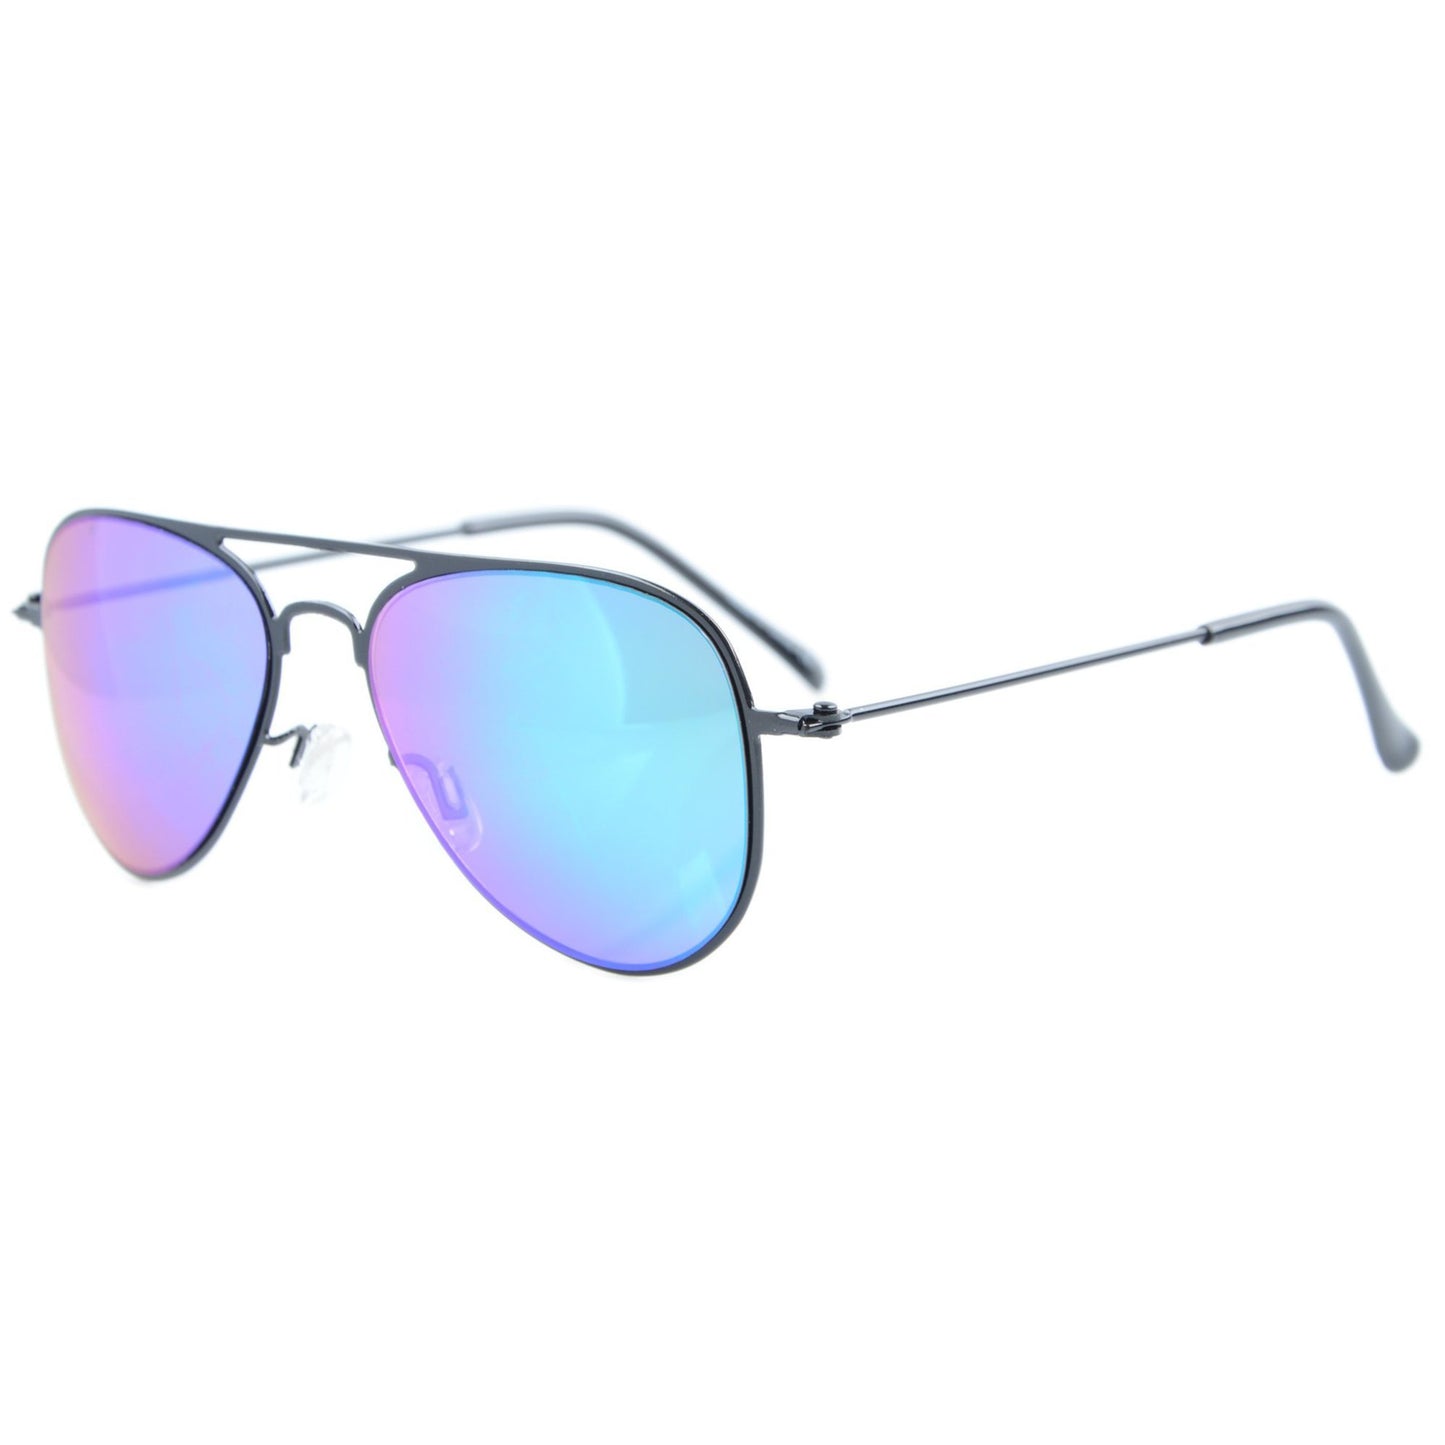 Pilot Sunglasses Blue Mirror S15017